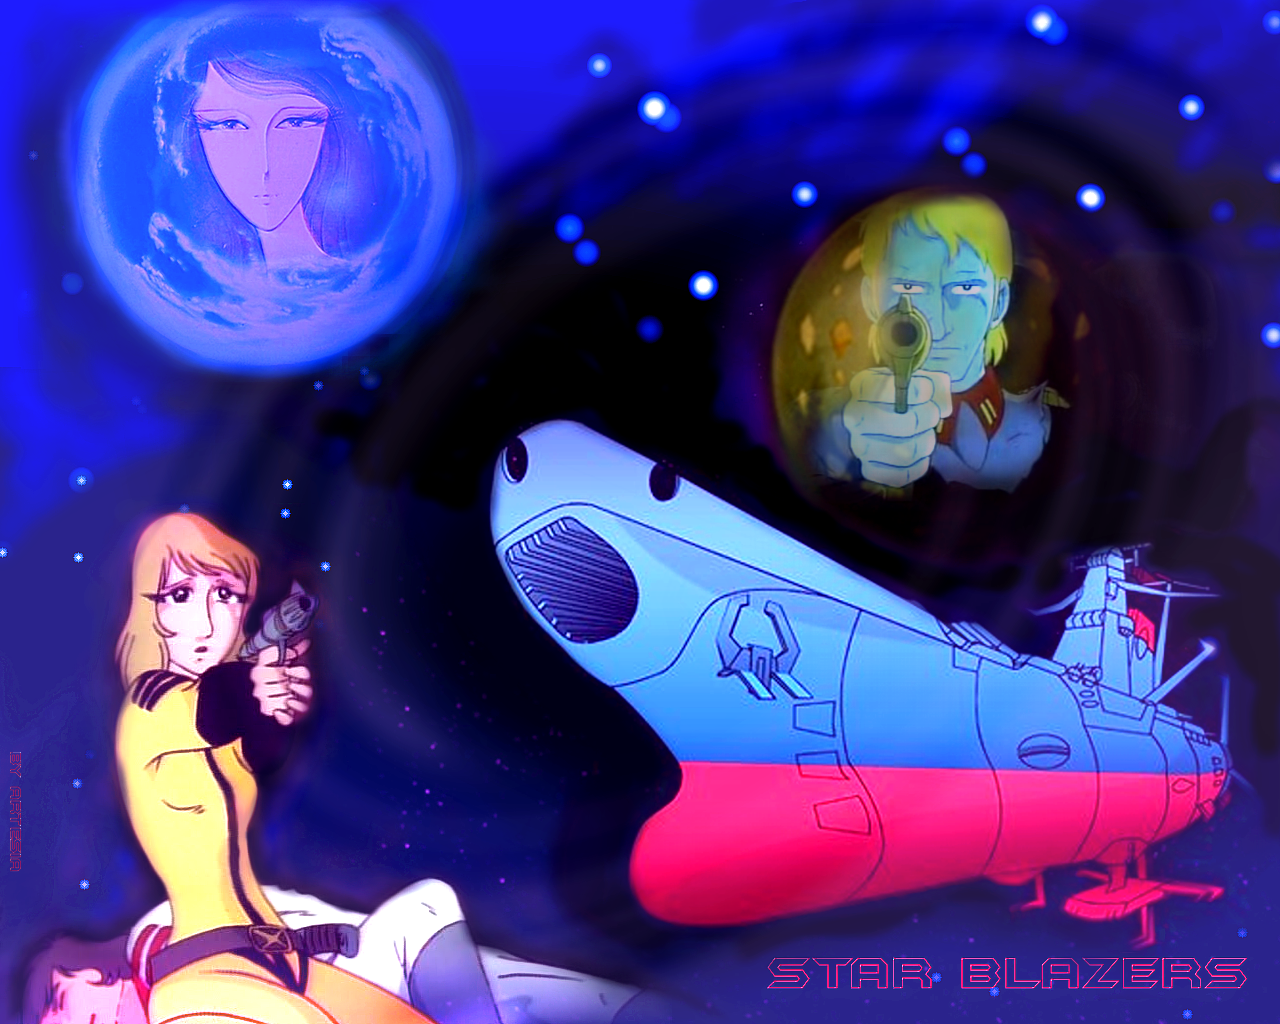 Space Battleship Yamato Wallpaper: Star Blazers Stories. Star blazers, Yamato, Space battleship